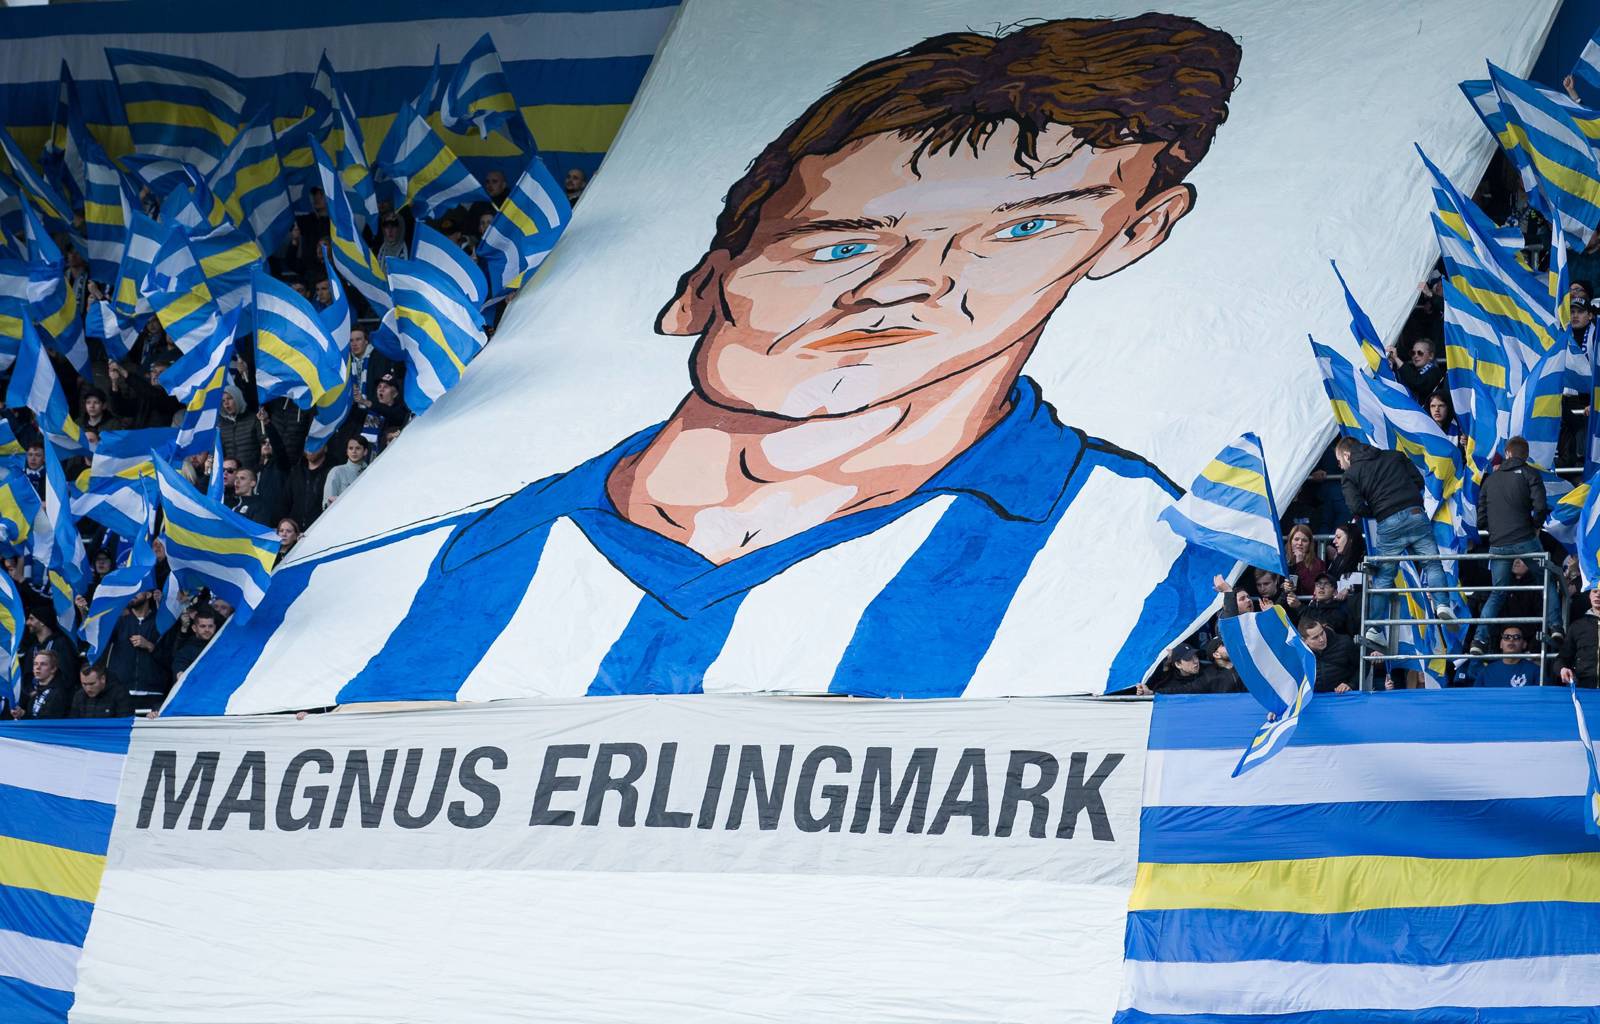 Magnus Erlingmark 1